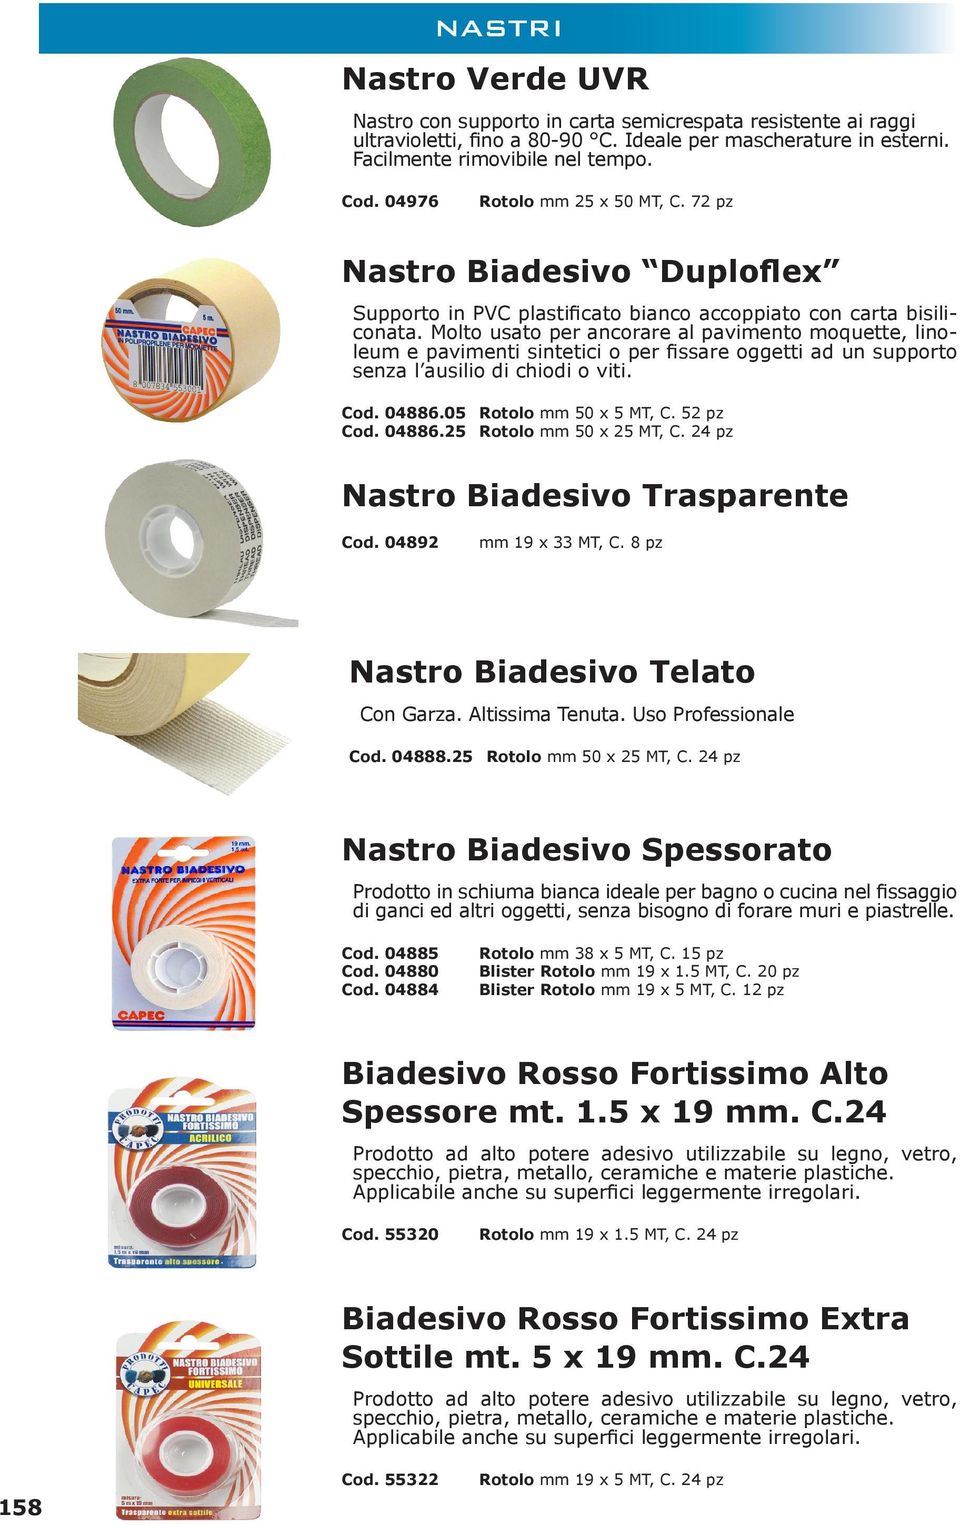 04892 Nastro Biadesivo Telato Cod. 04888.25 Rotolo Nastro Biadesivo Spessorato Cod. 04885 Rotolo Cod. 04880 Blister Rotolo Cod.